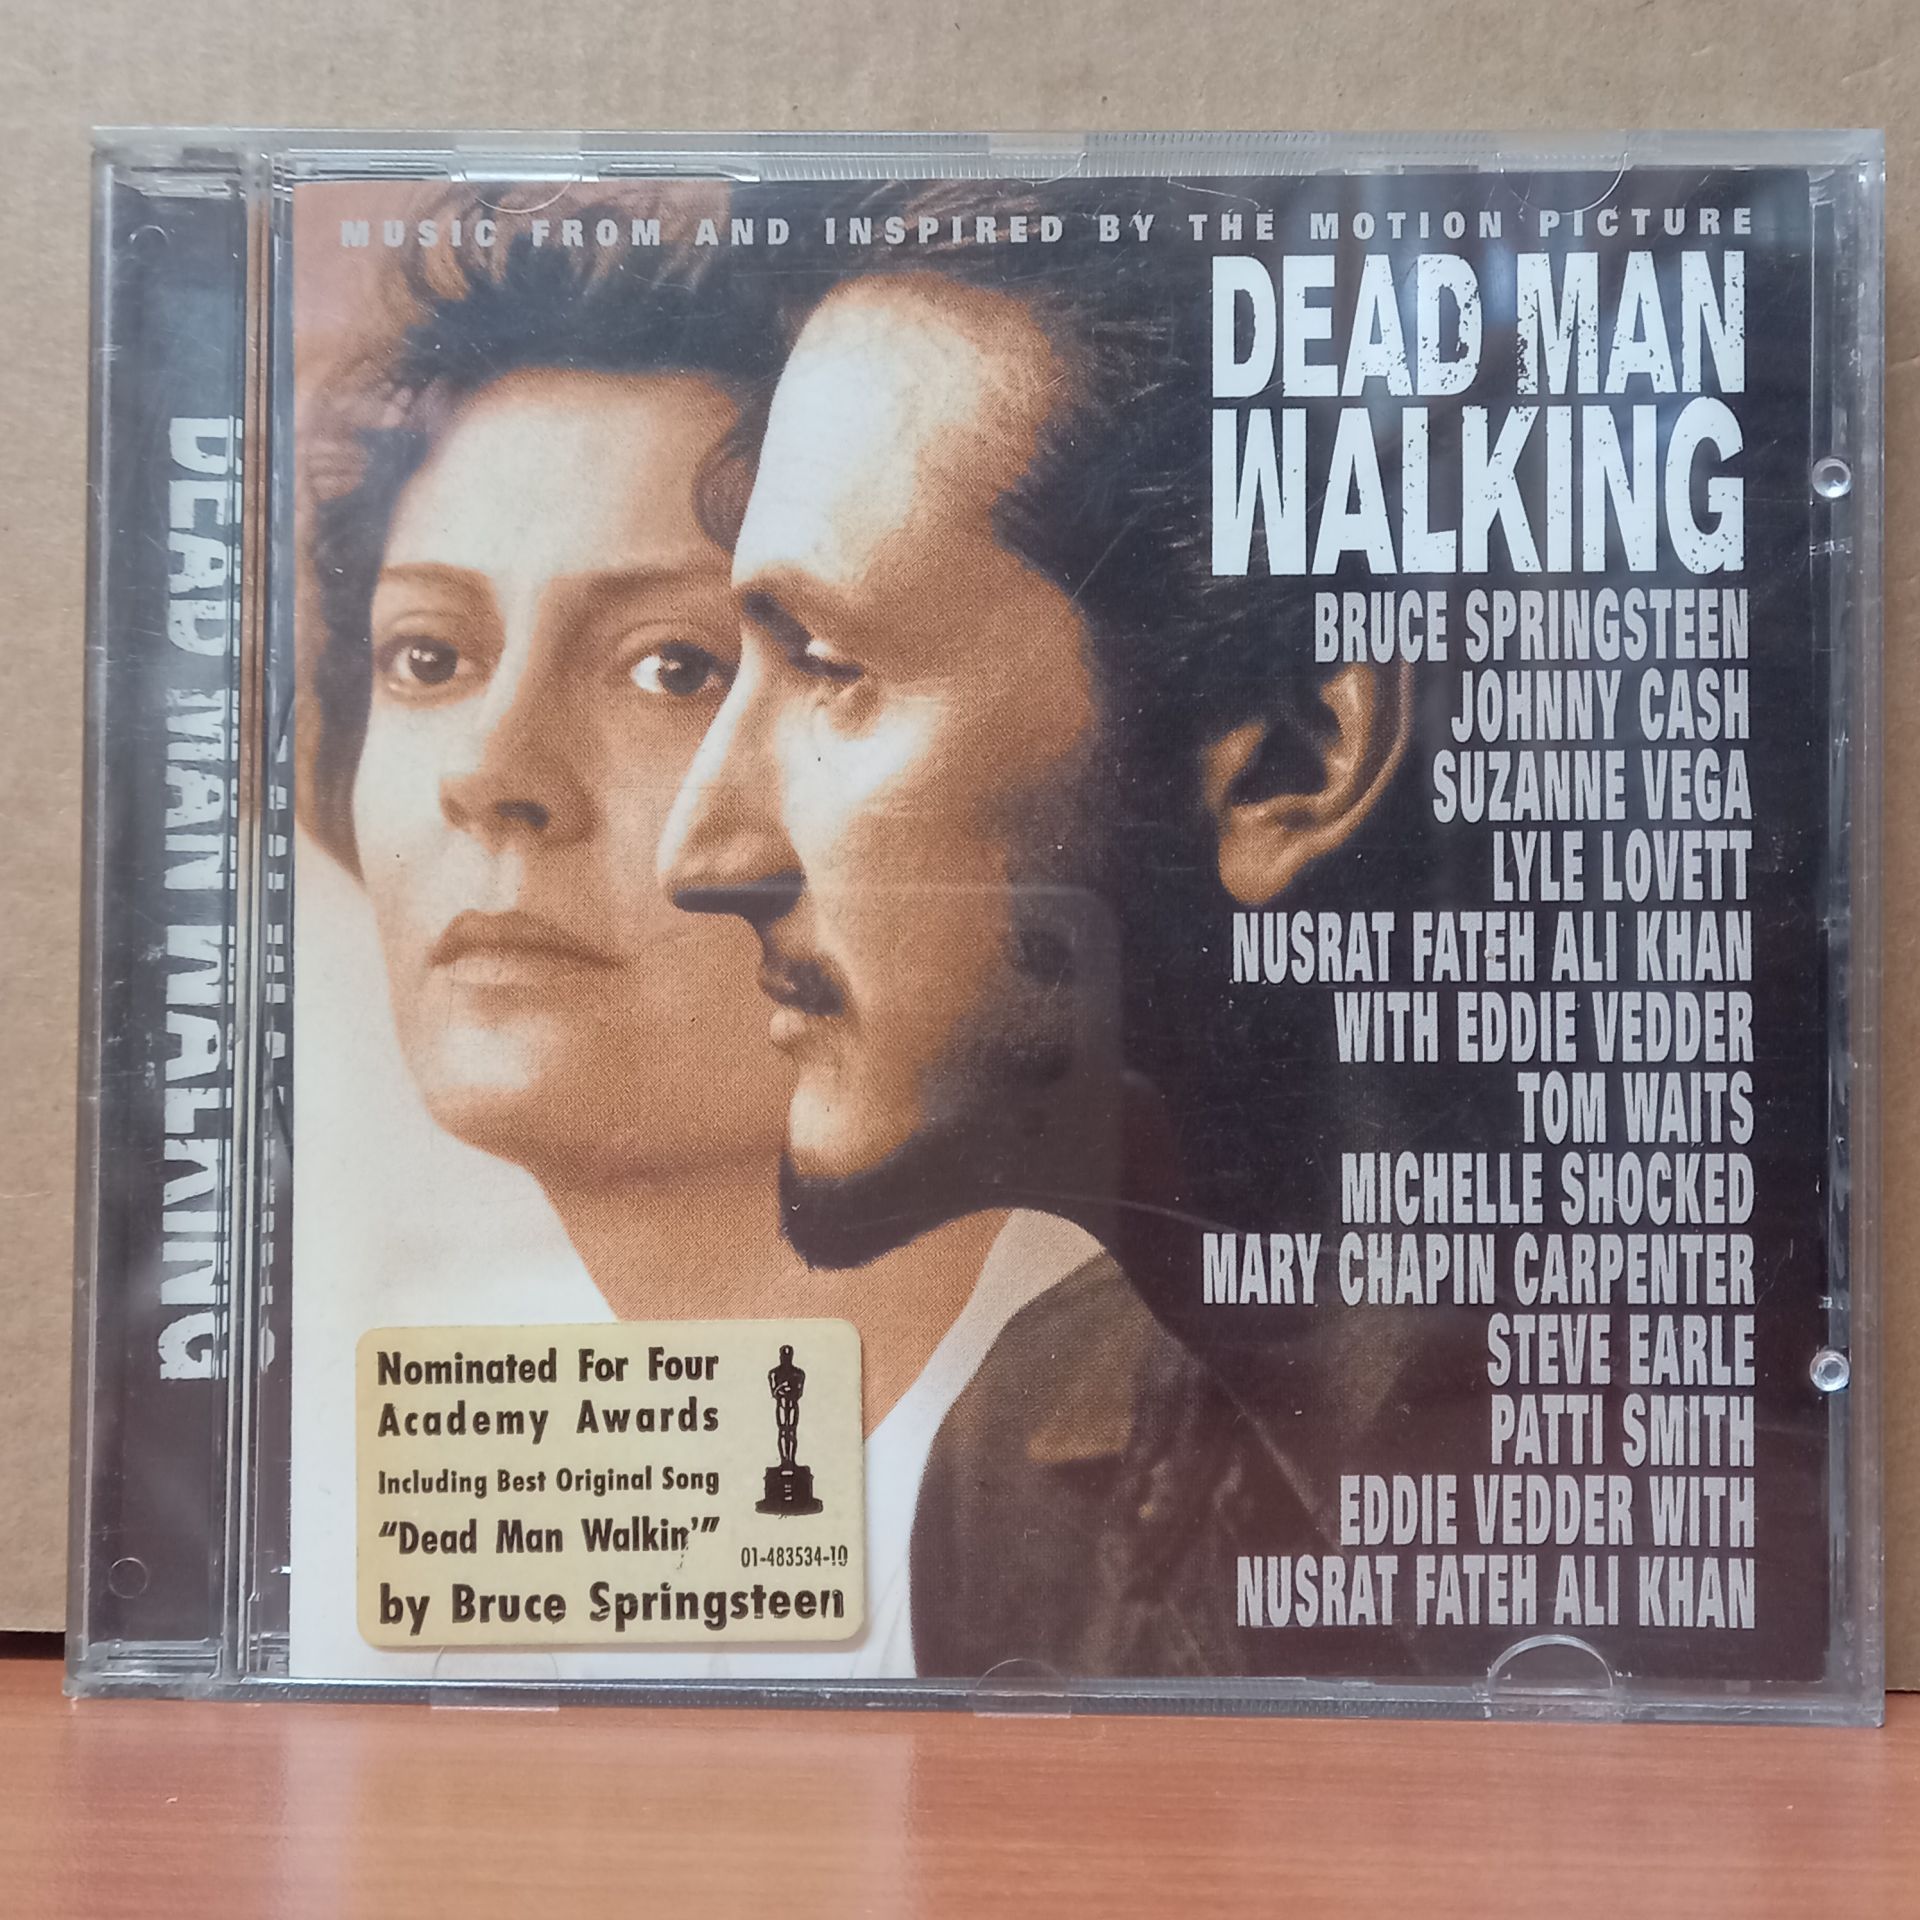 DEAD MAN WALKING / BRUCE SPRINGSTEEN, JOHNNY CASH, TOM WAITS, PATTI SMITH (1995) - CD 2.EL